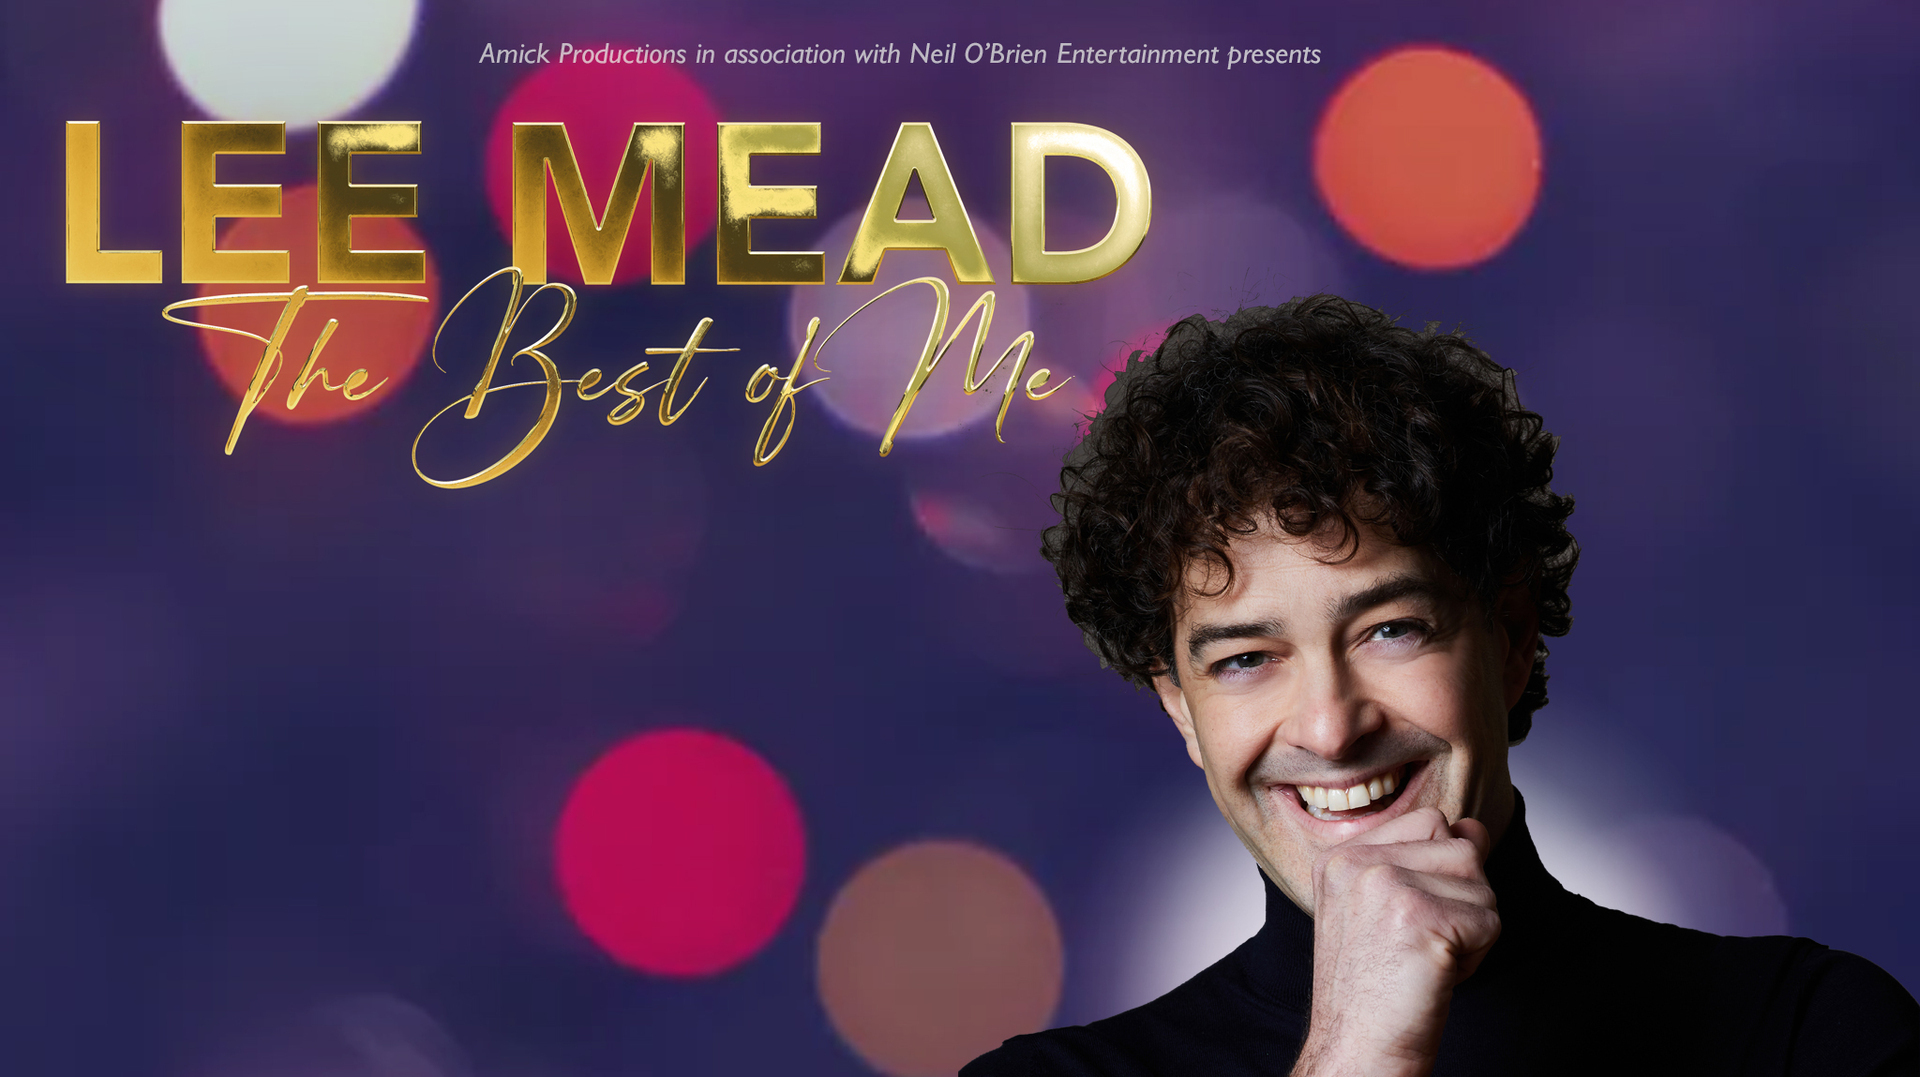 Lee Mead 'The Best Of Me' - Blyth, Blyth, England, United Kingdom